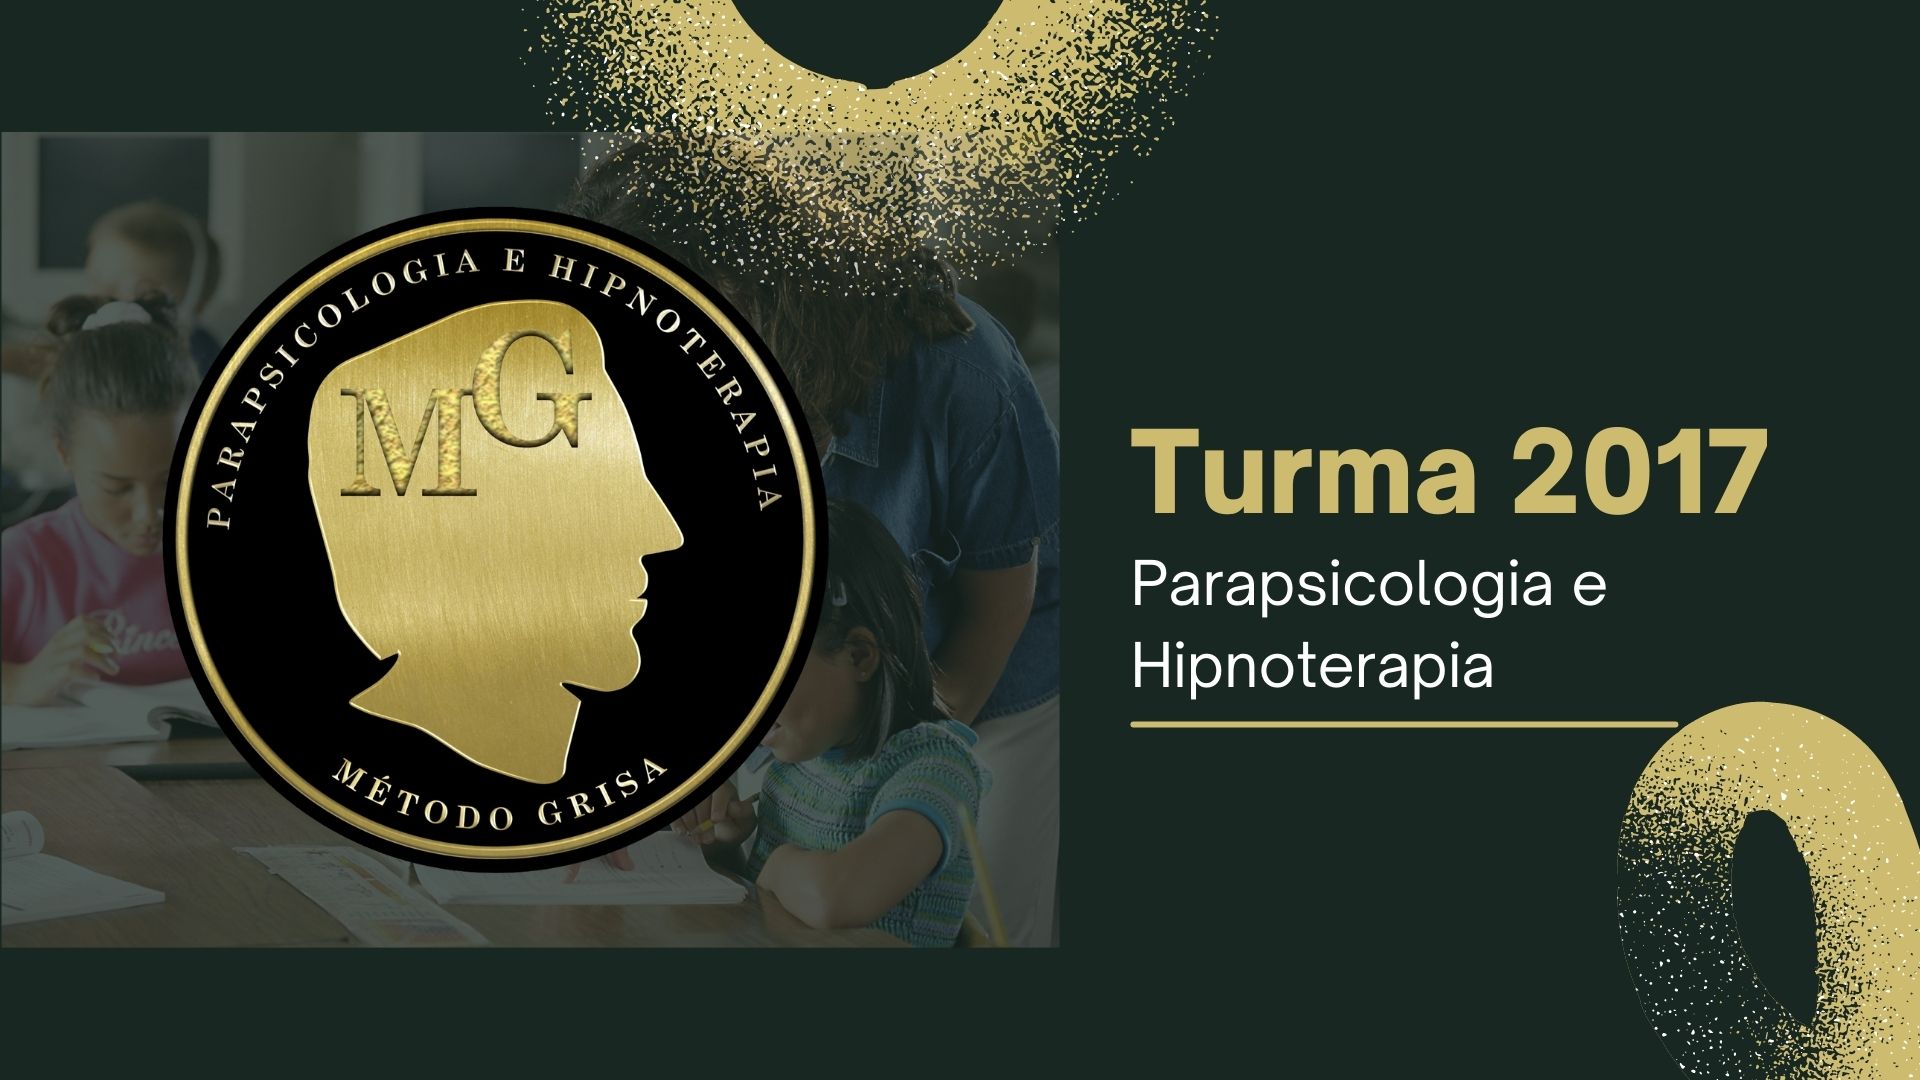 Parapsicologia e Hipnoterapia Turma 2017